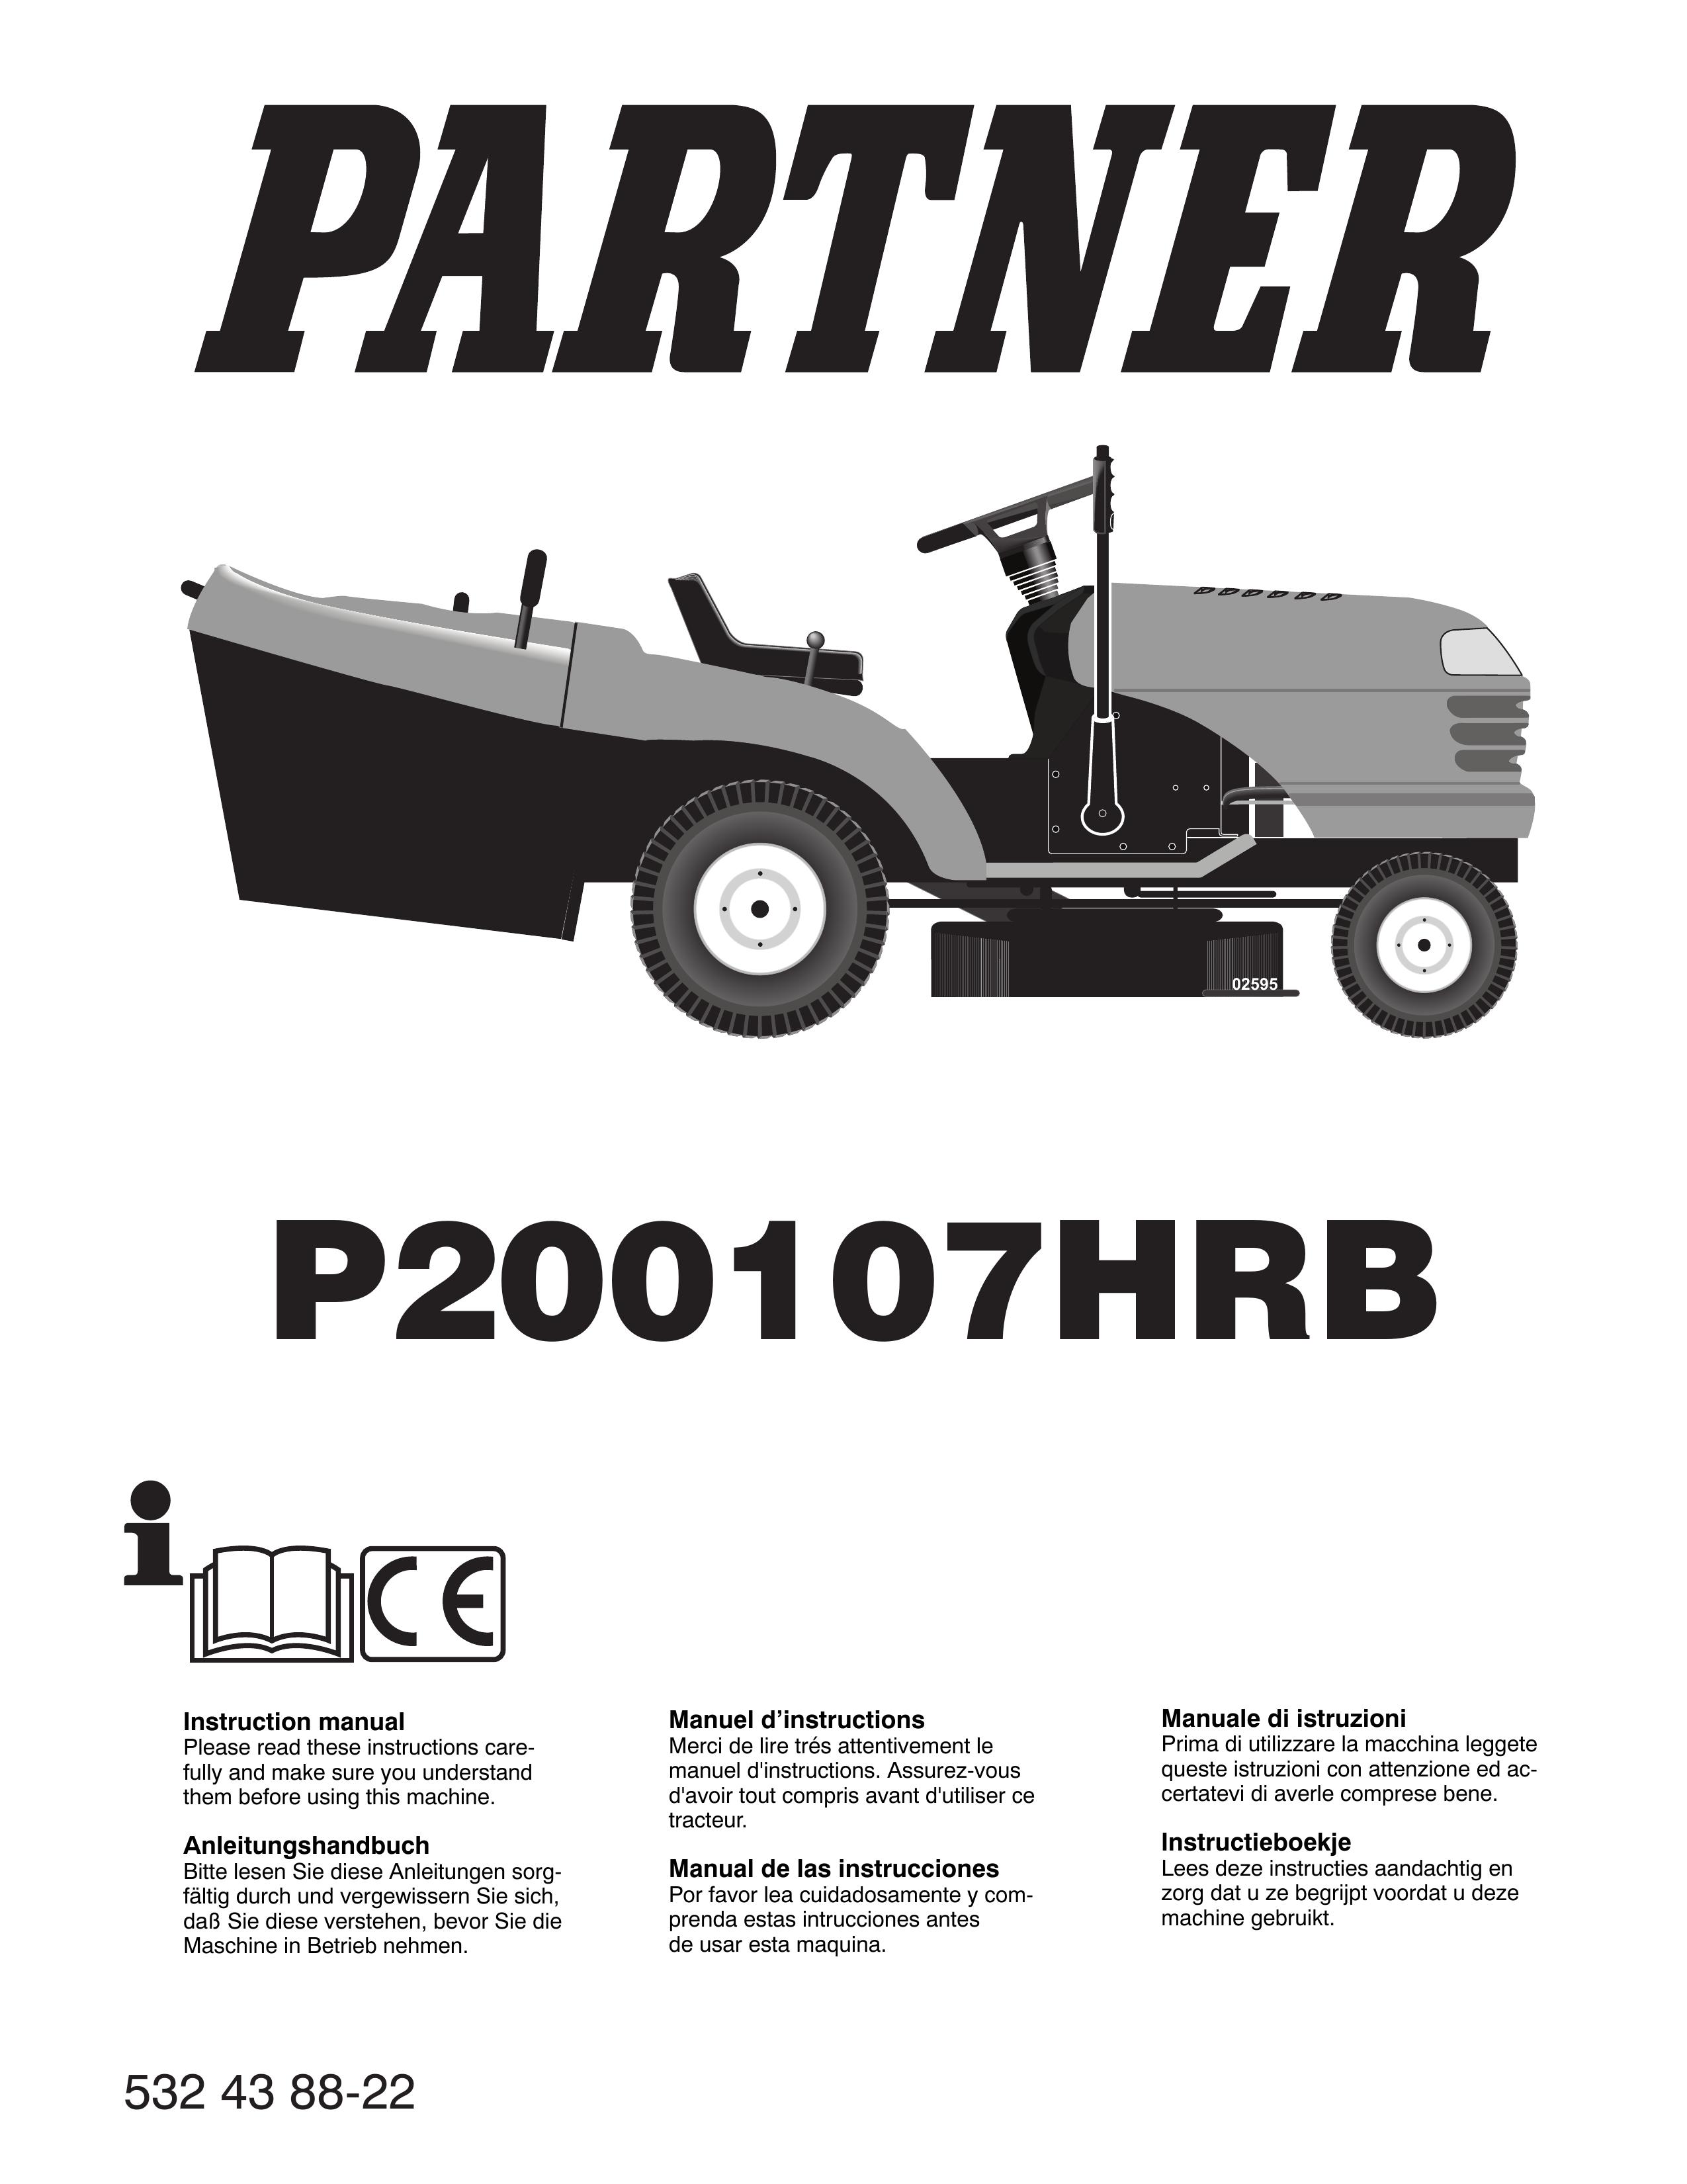 Partner Tech P200107HRB Lawn Mower User Manual